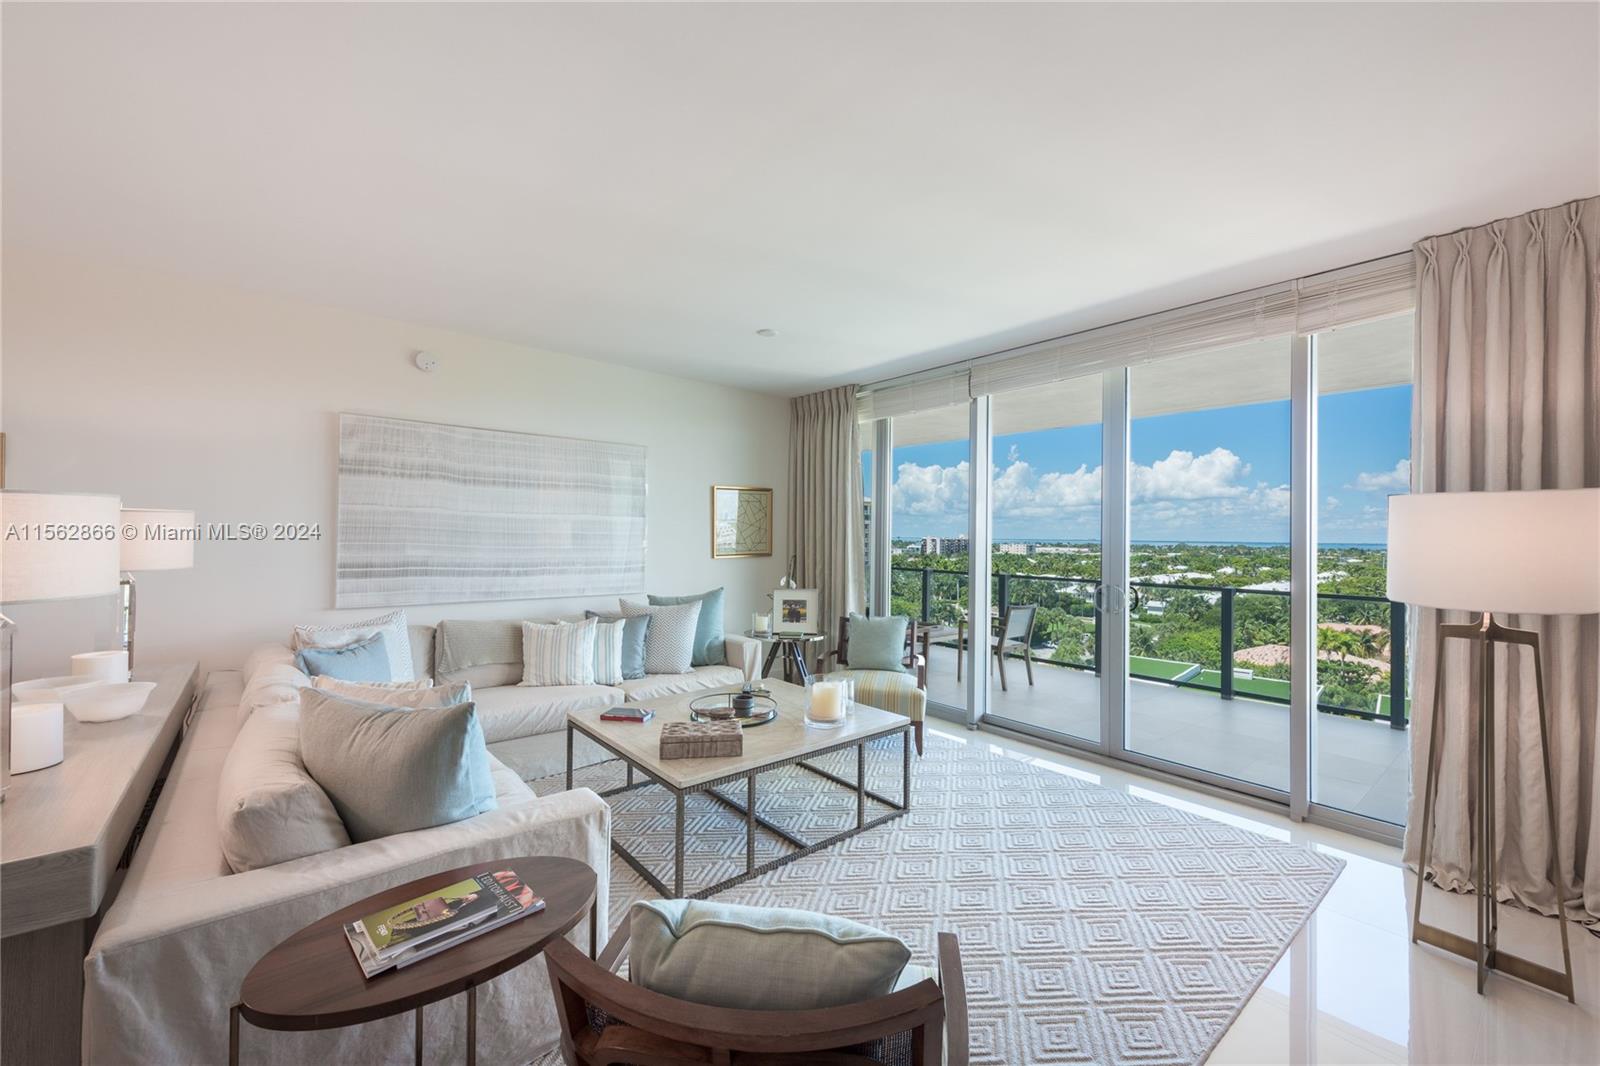 Rental Property at 360 Ocean Dr 905S, Key Biscayne, Miami-Dade County, Florida - Bedrooms: 2 
Bathrooms: 3  - $20,000 MO.